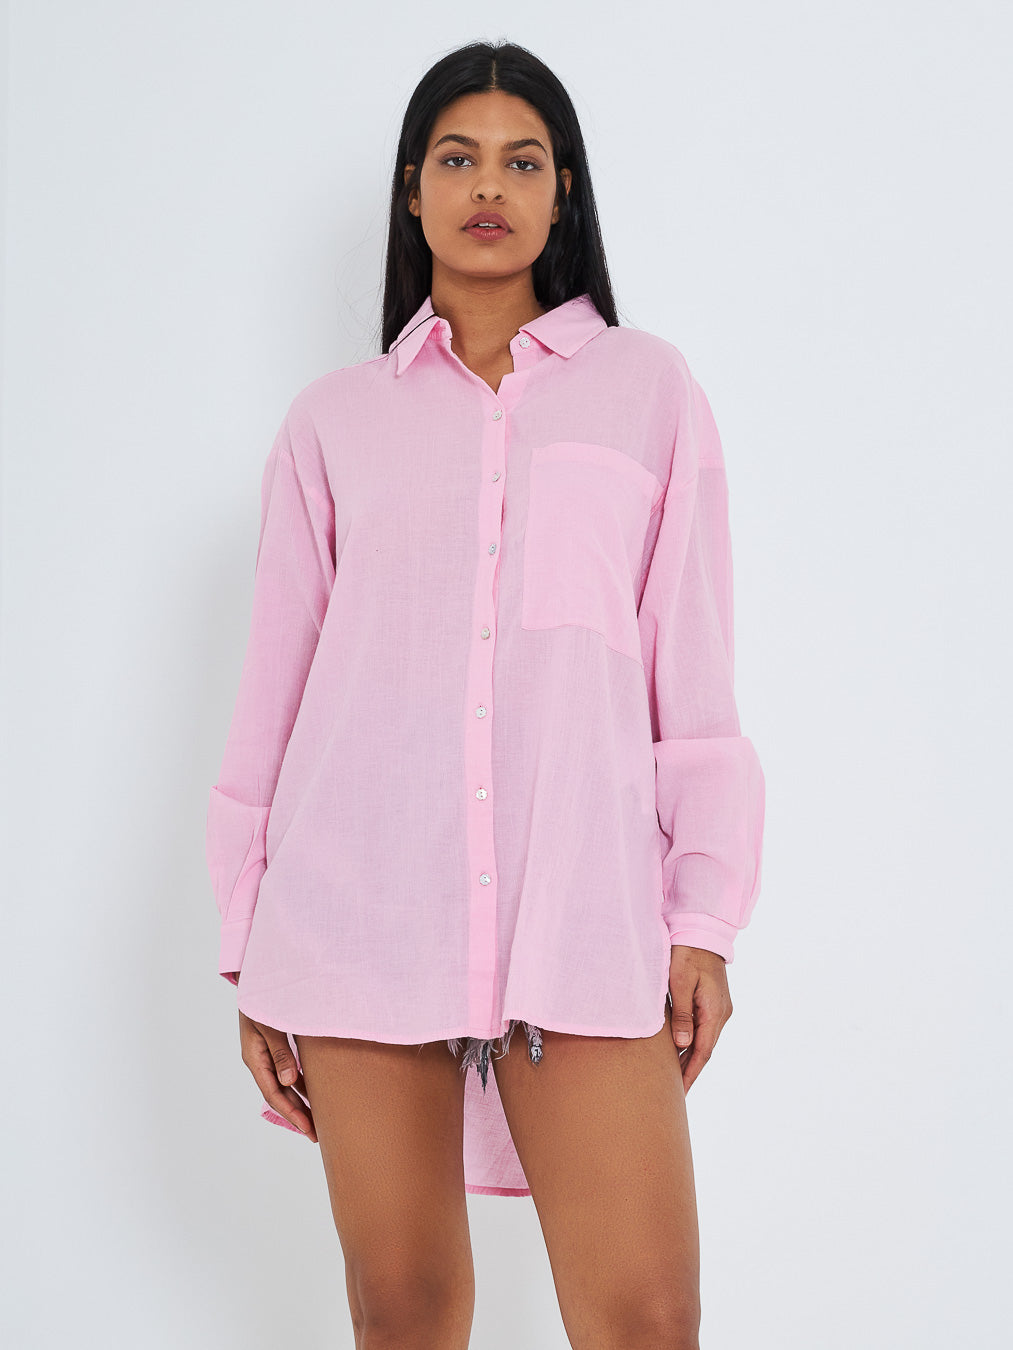 Pieces pink over shirt